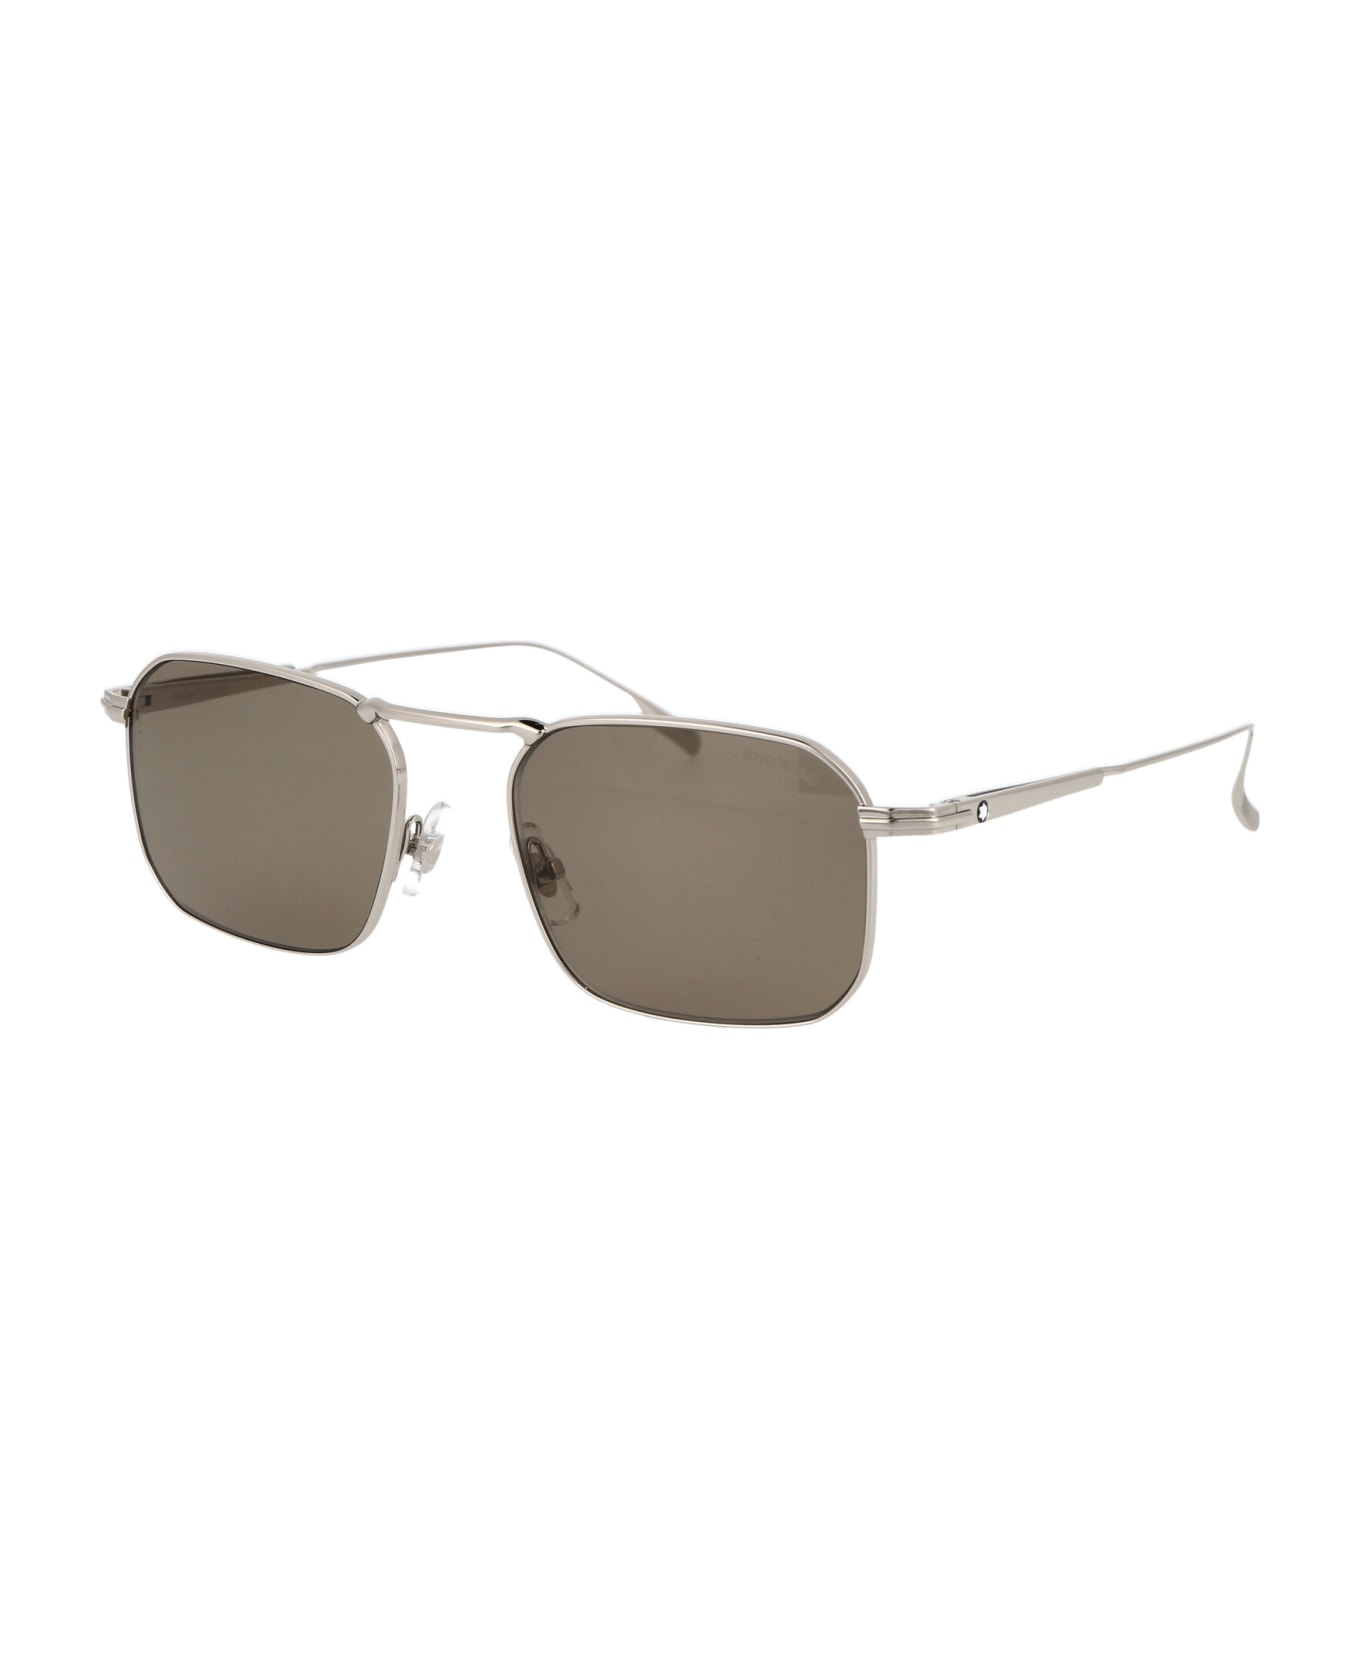 Montblanc Mb0218s Sunglasses - 003 Sonny Havana Materica sunglasses